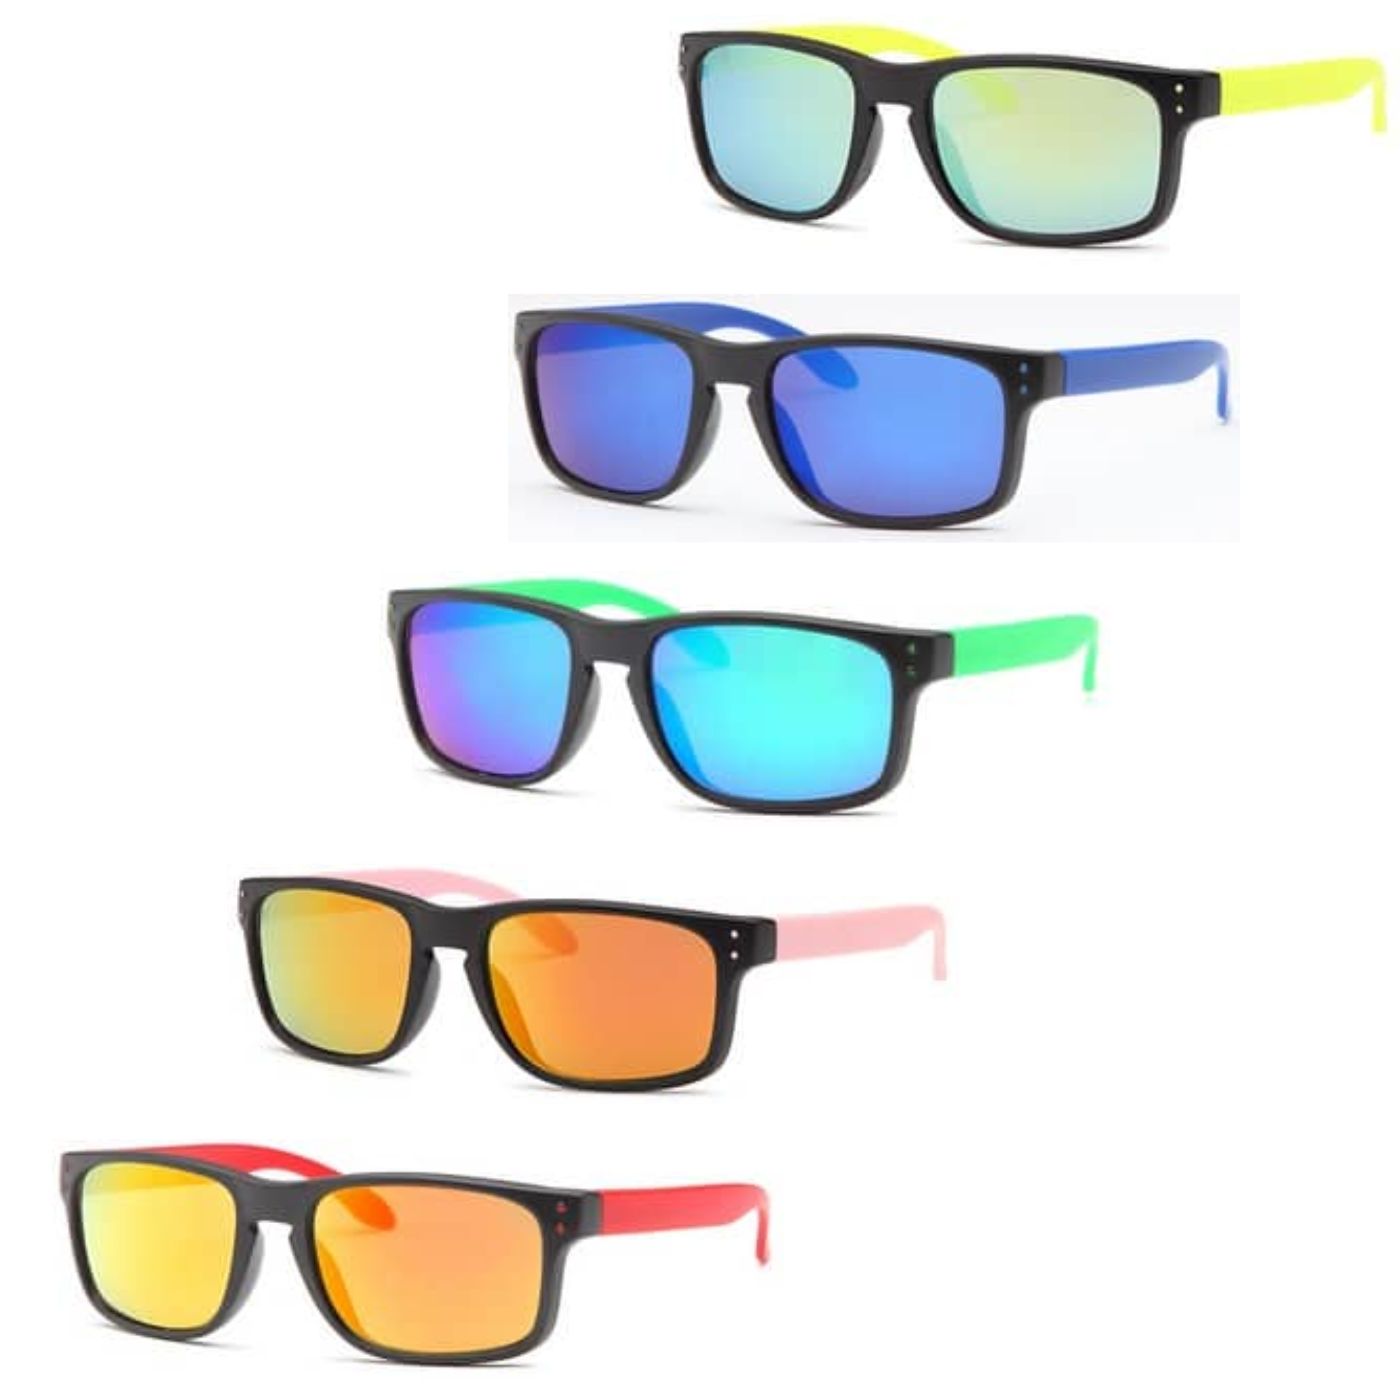 AFONiE Kids Colorblock Sunglasses - Box of 12